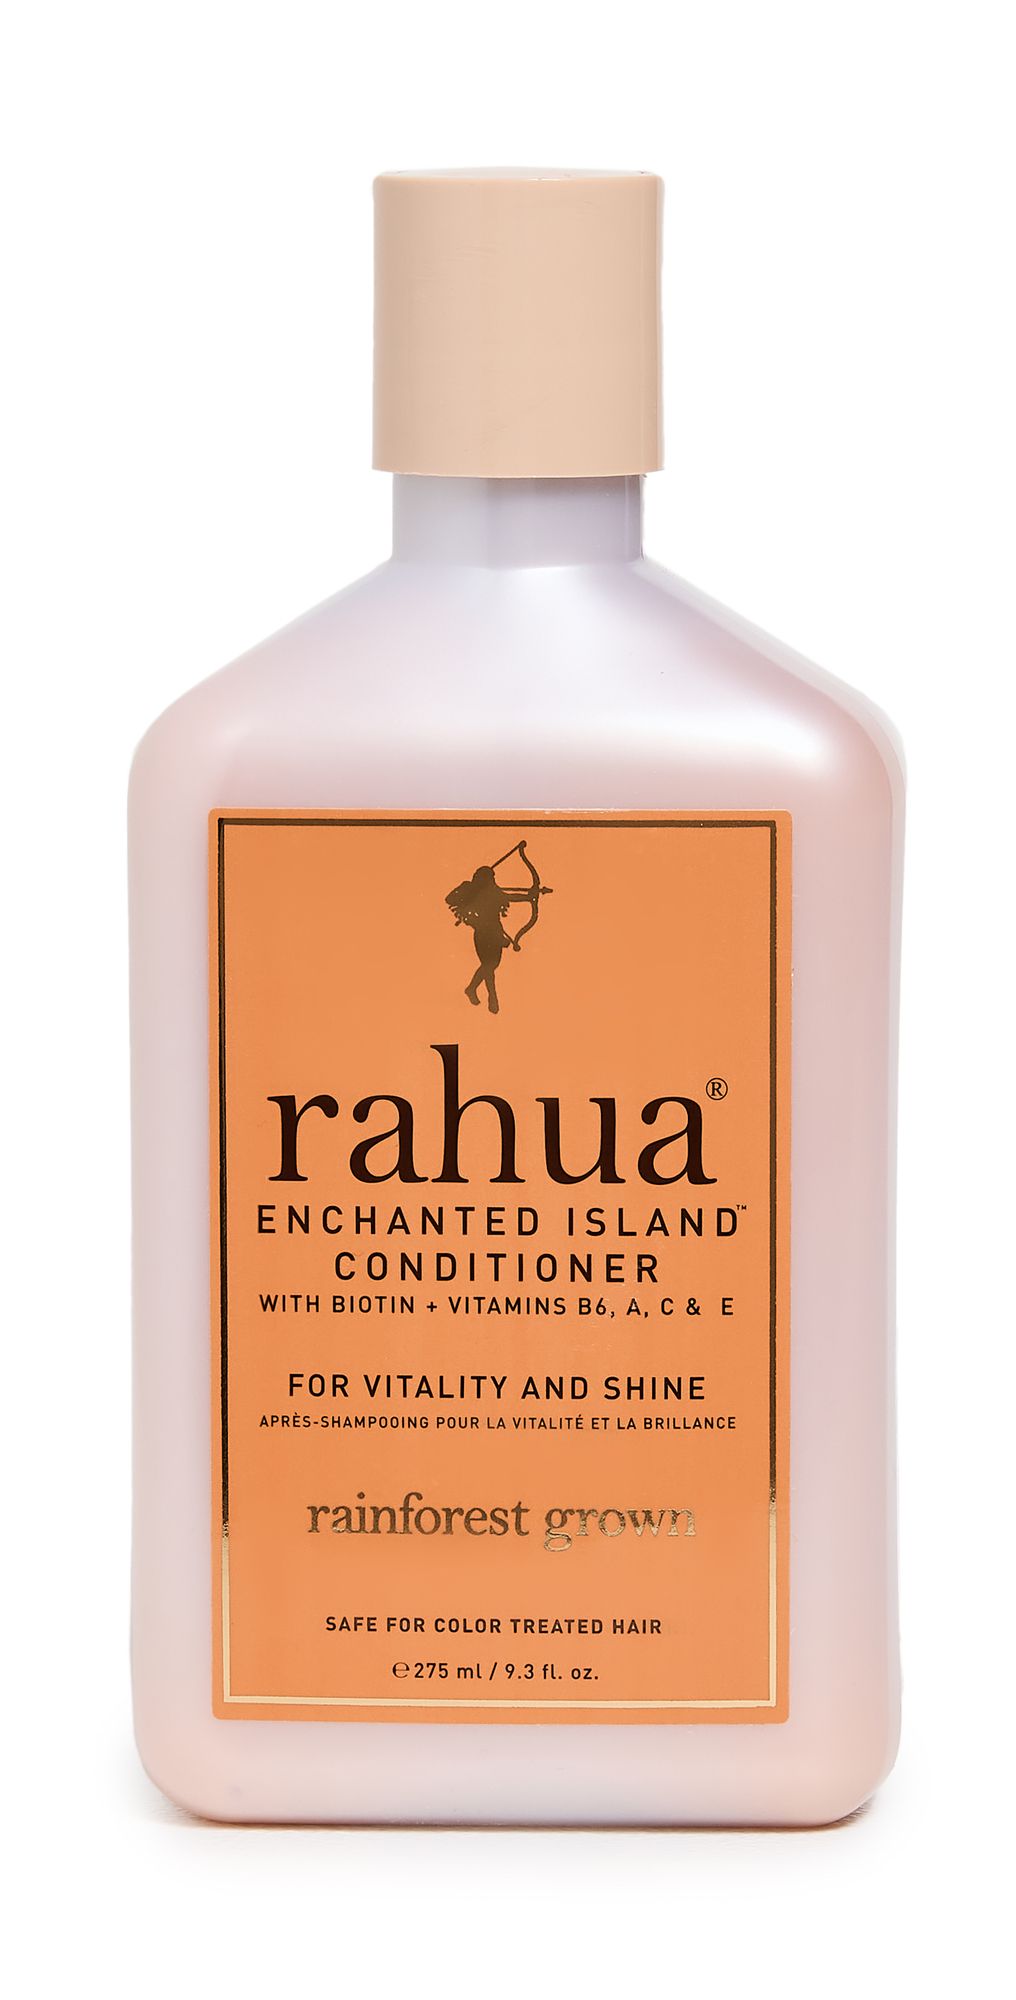 Rahua Enchanted Island Conditioner | Shopbop